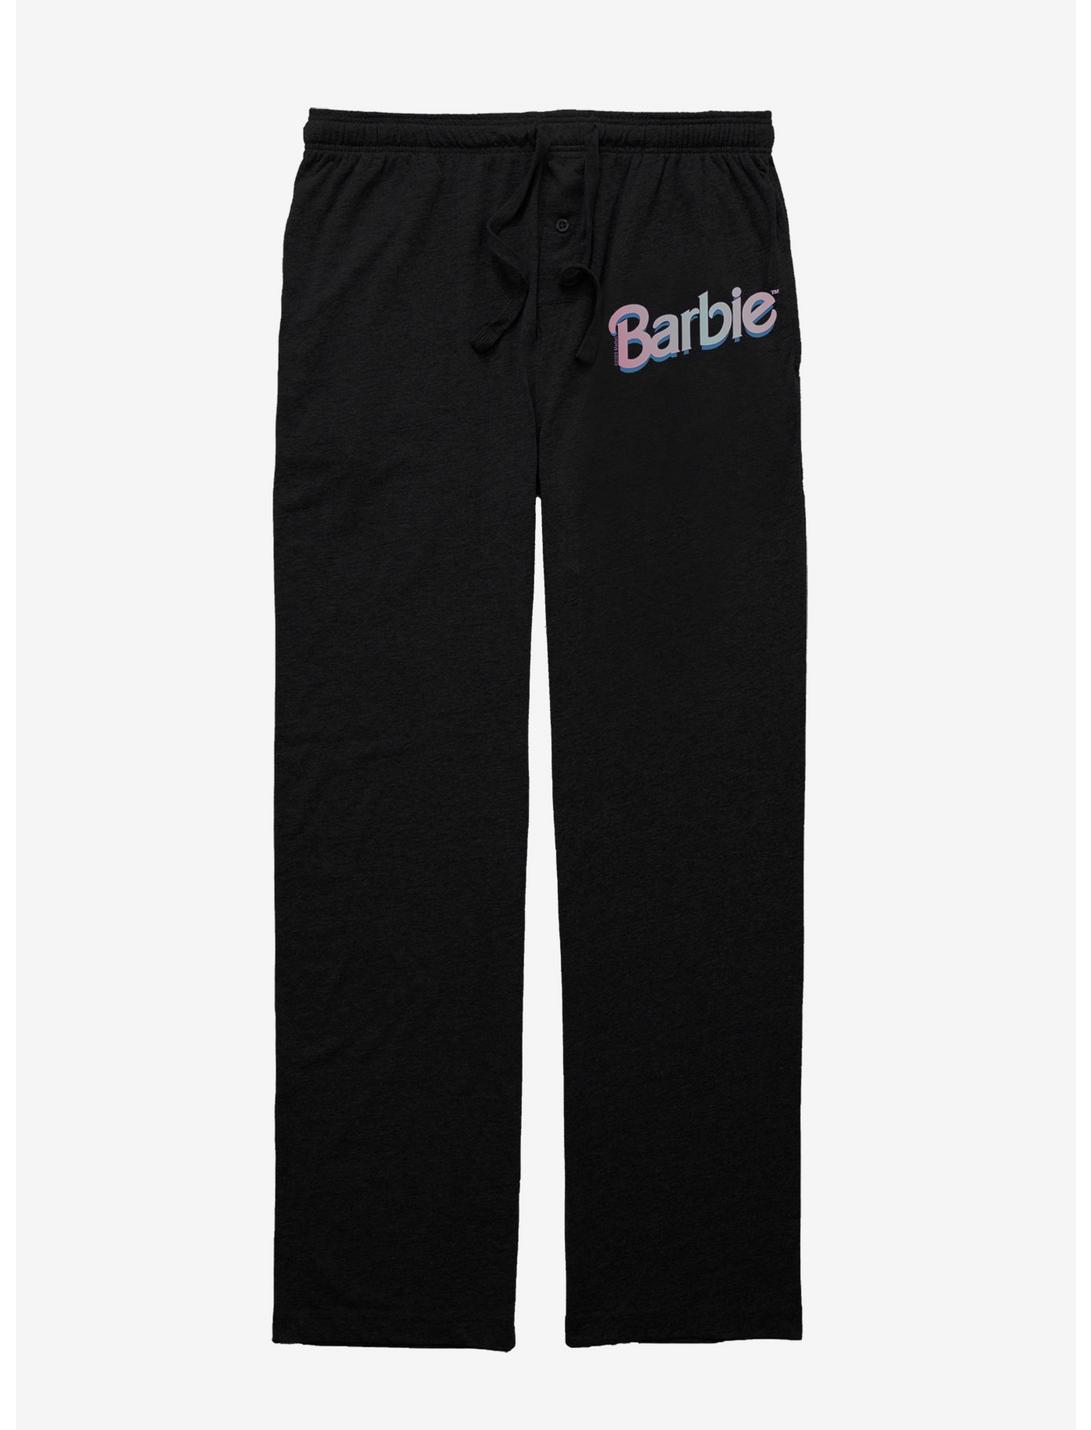 Barbie Cotton Candy Pajama Pants, BLACK, hi-res